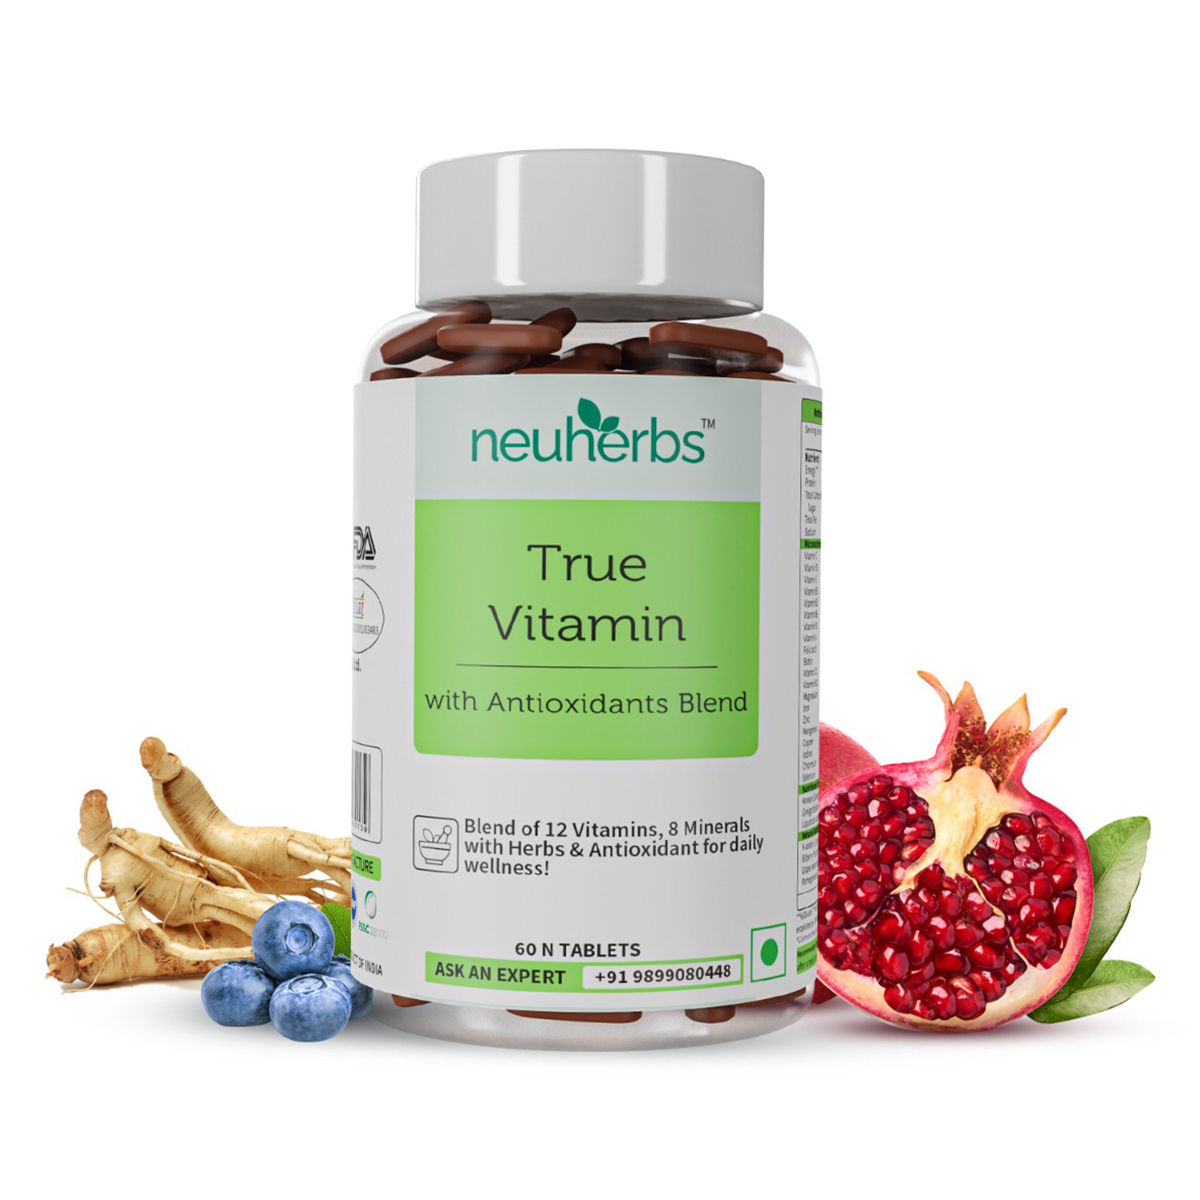 Buy Neuherbs True Vitamins with Antioxidants Blend, 60 Tablets Online